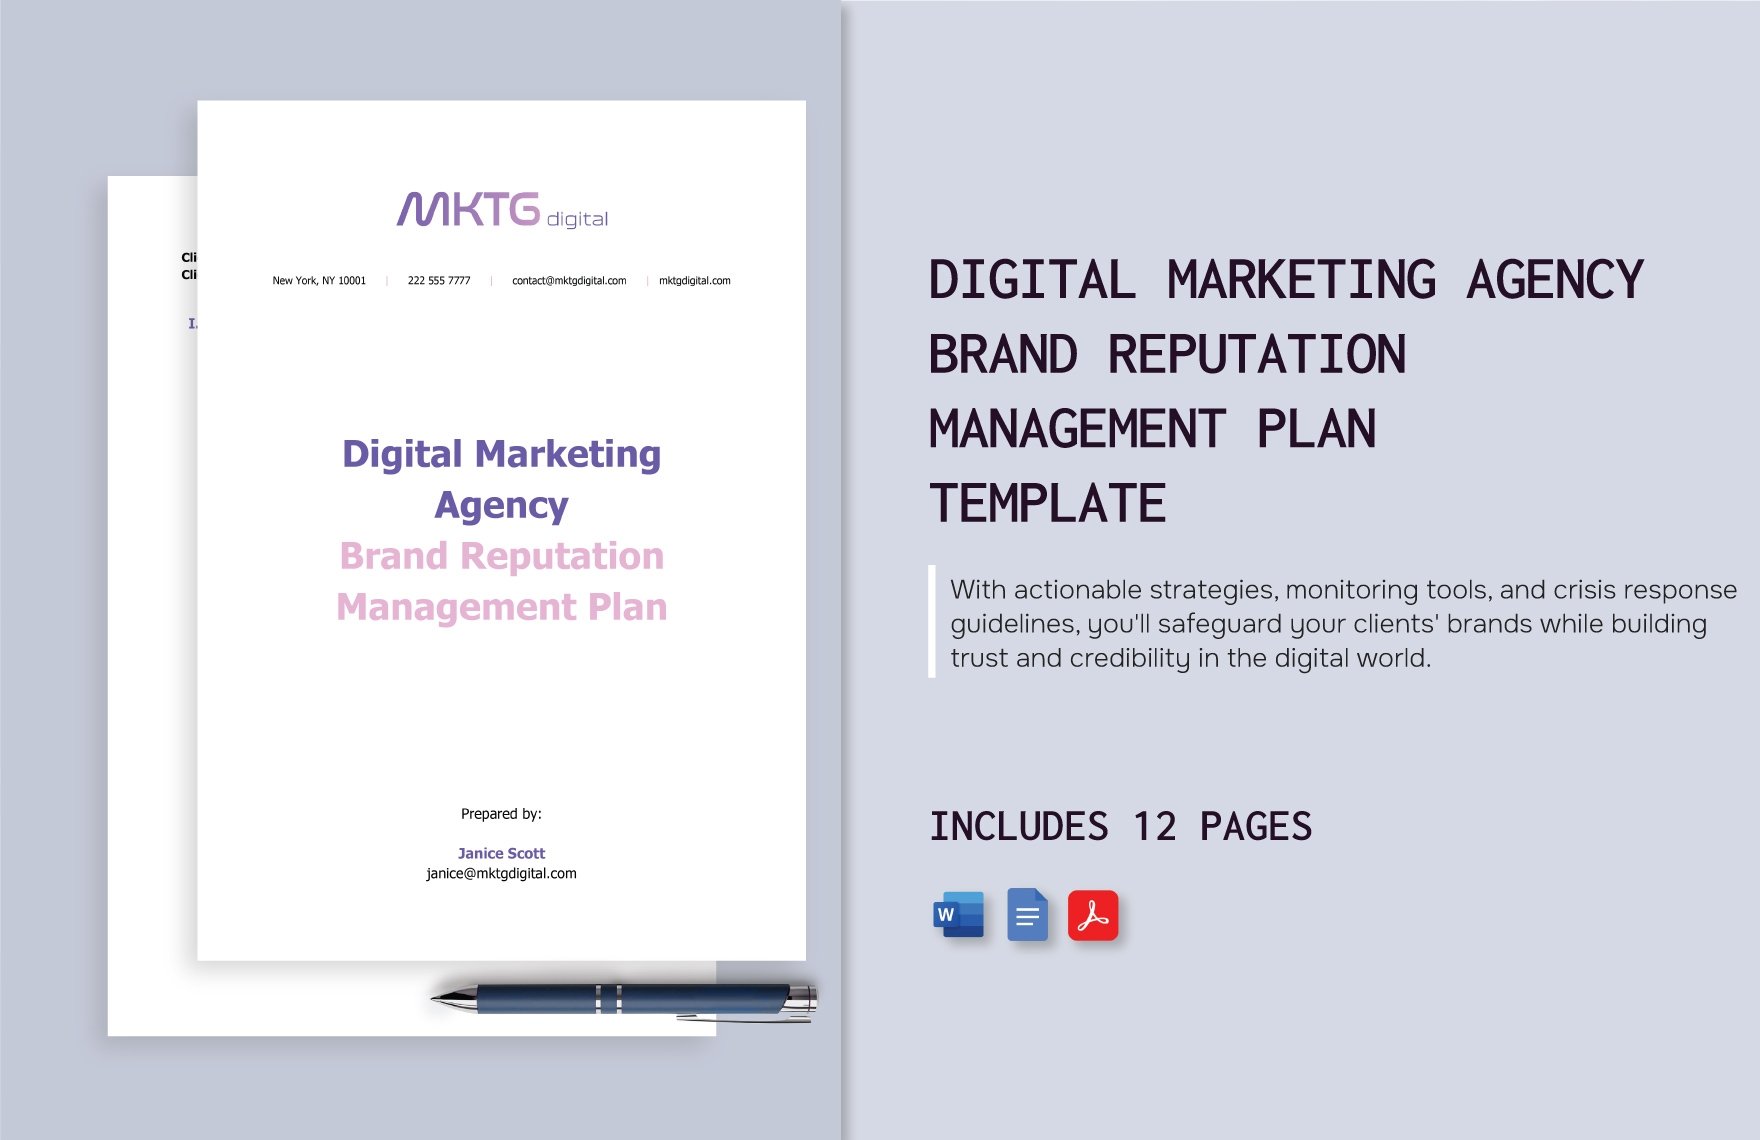 Digital Marketing Agency Brand Reputation Management Plan Template